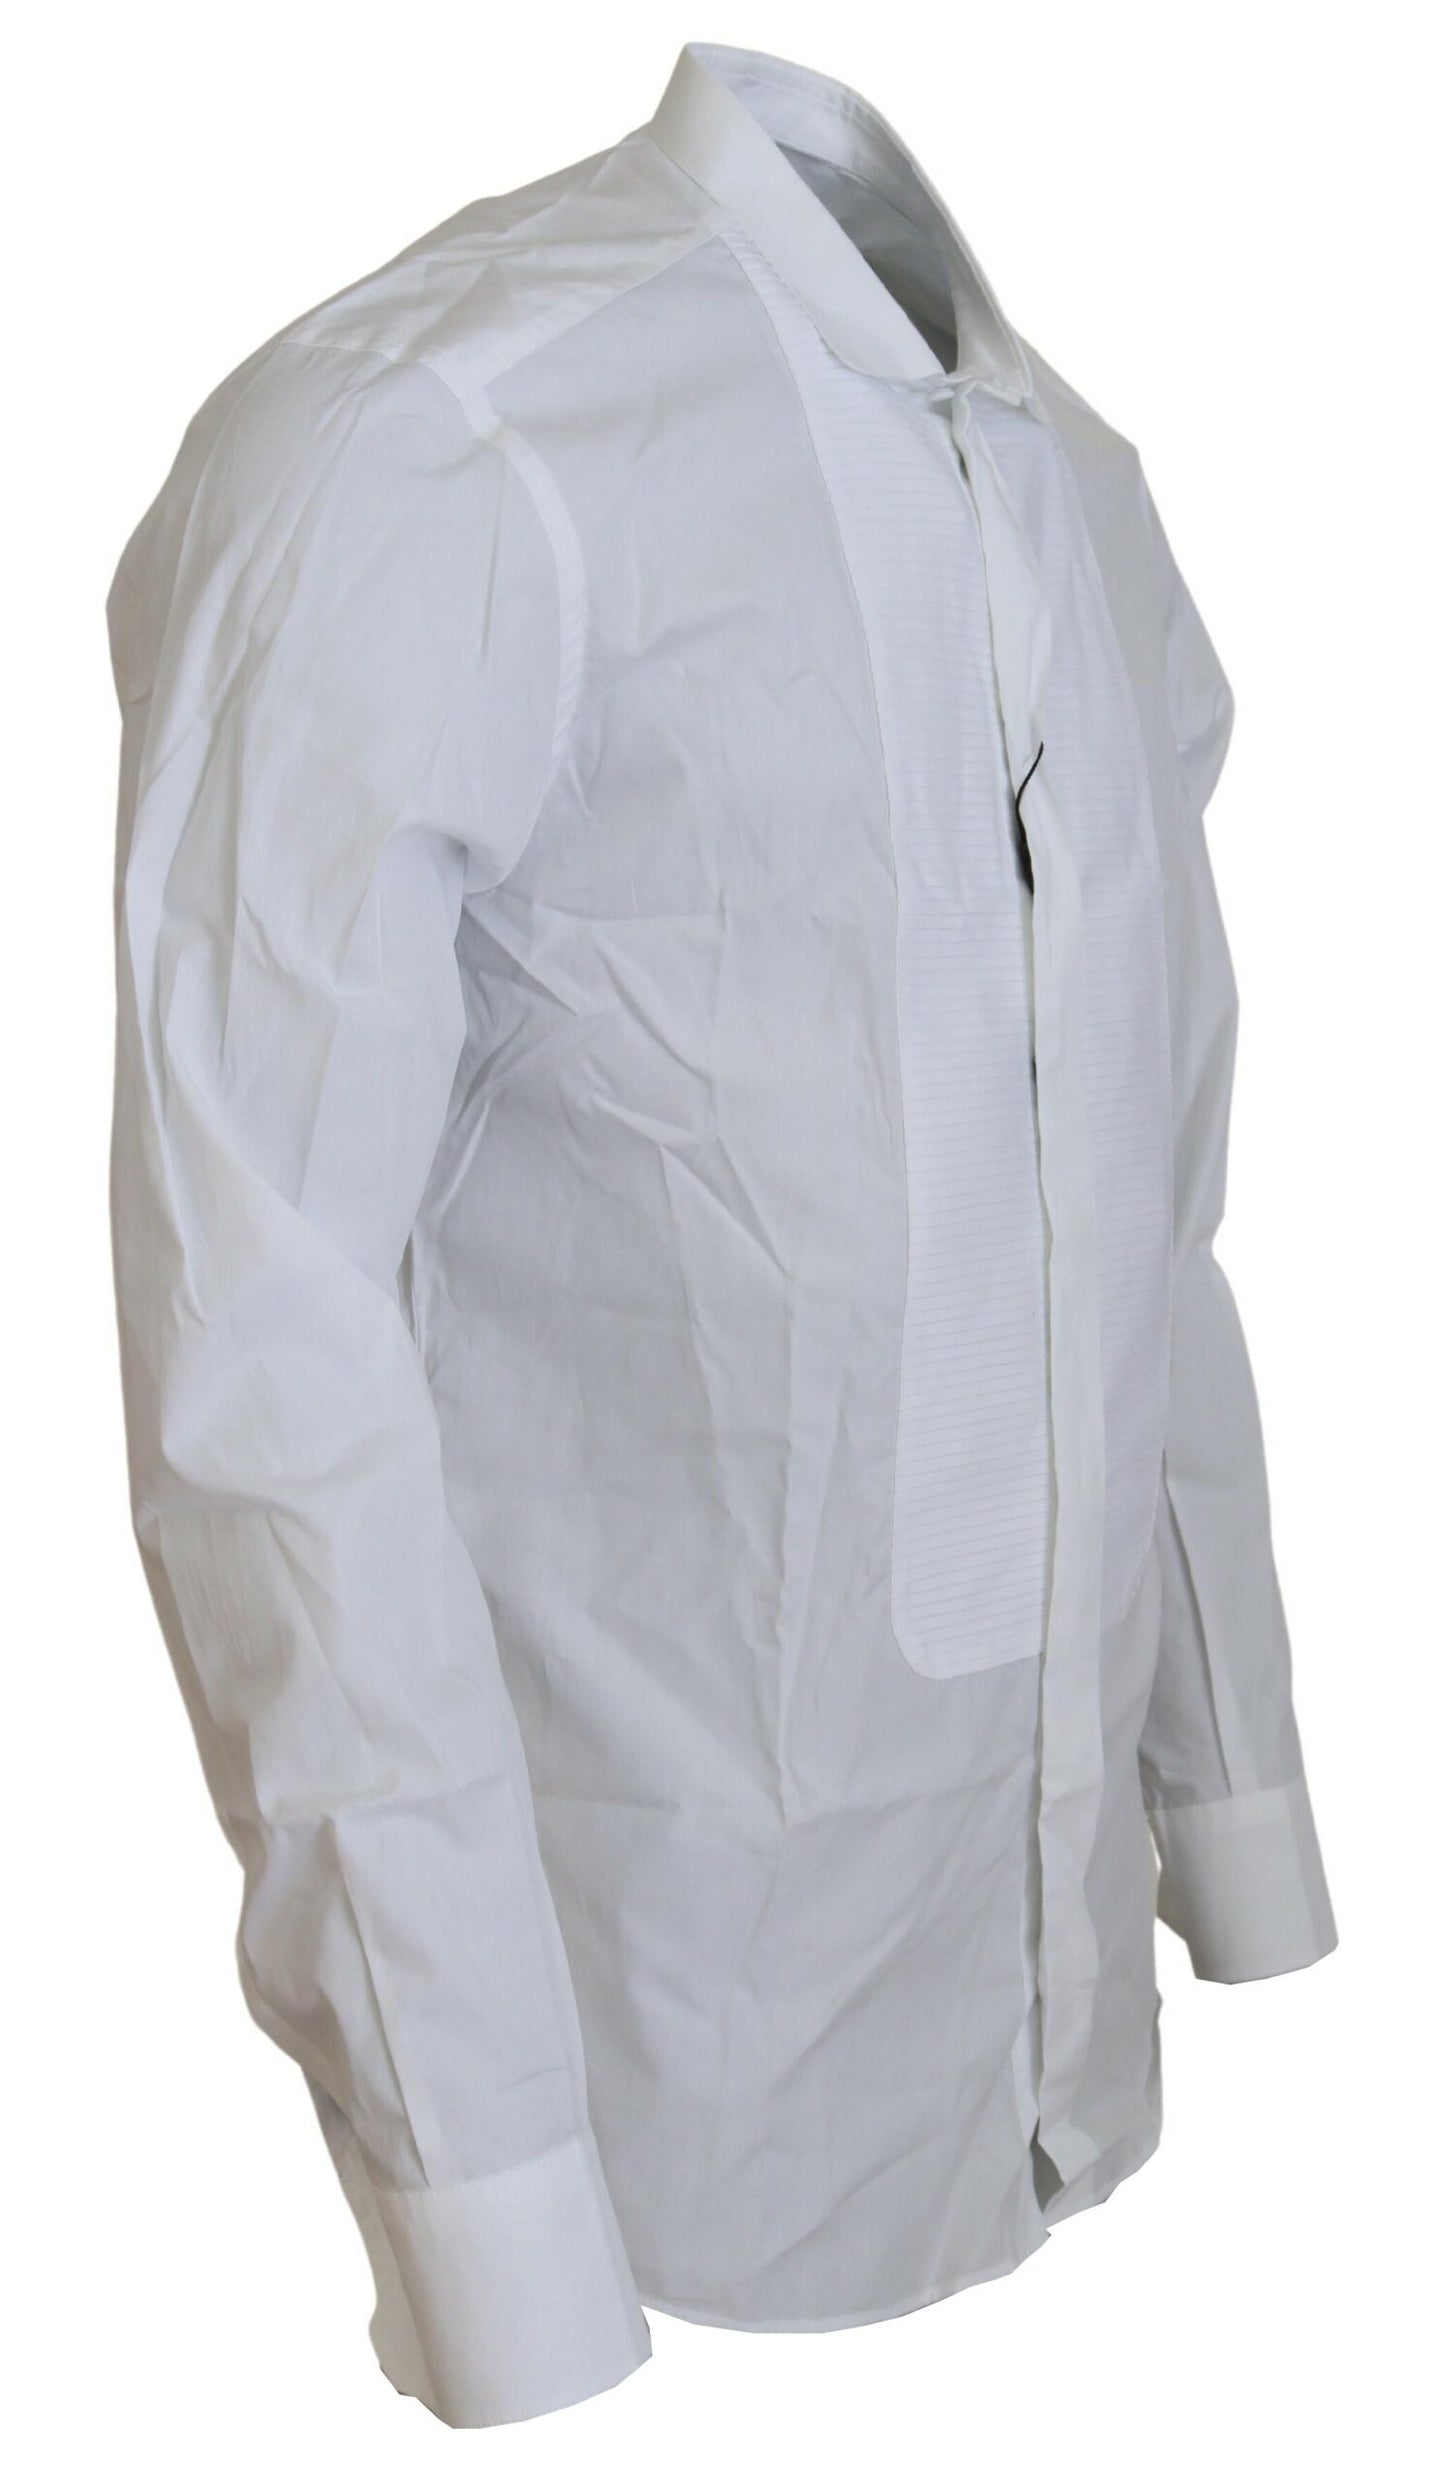 Exquisite White Cotton Formal Shirt